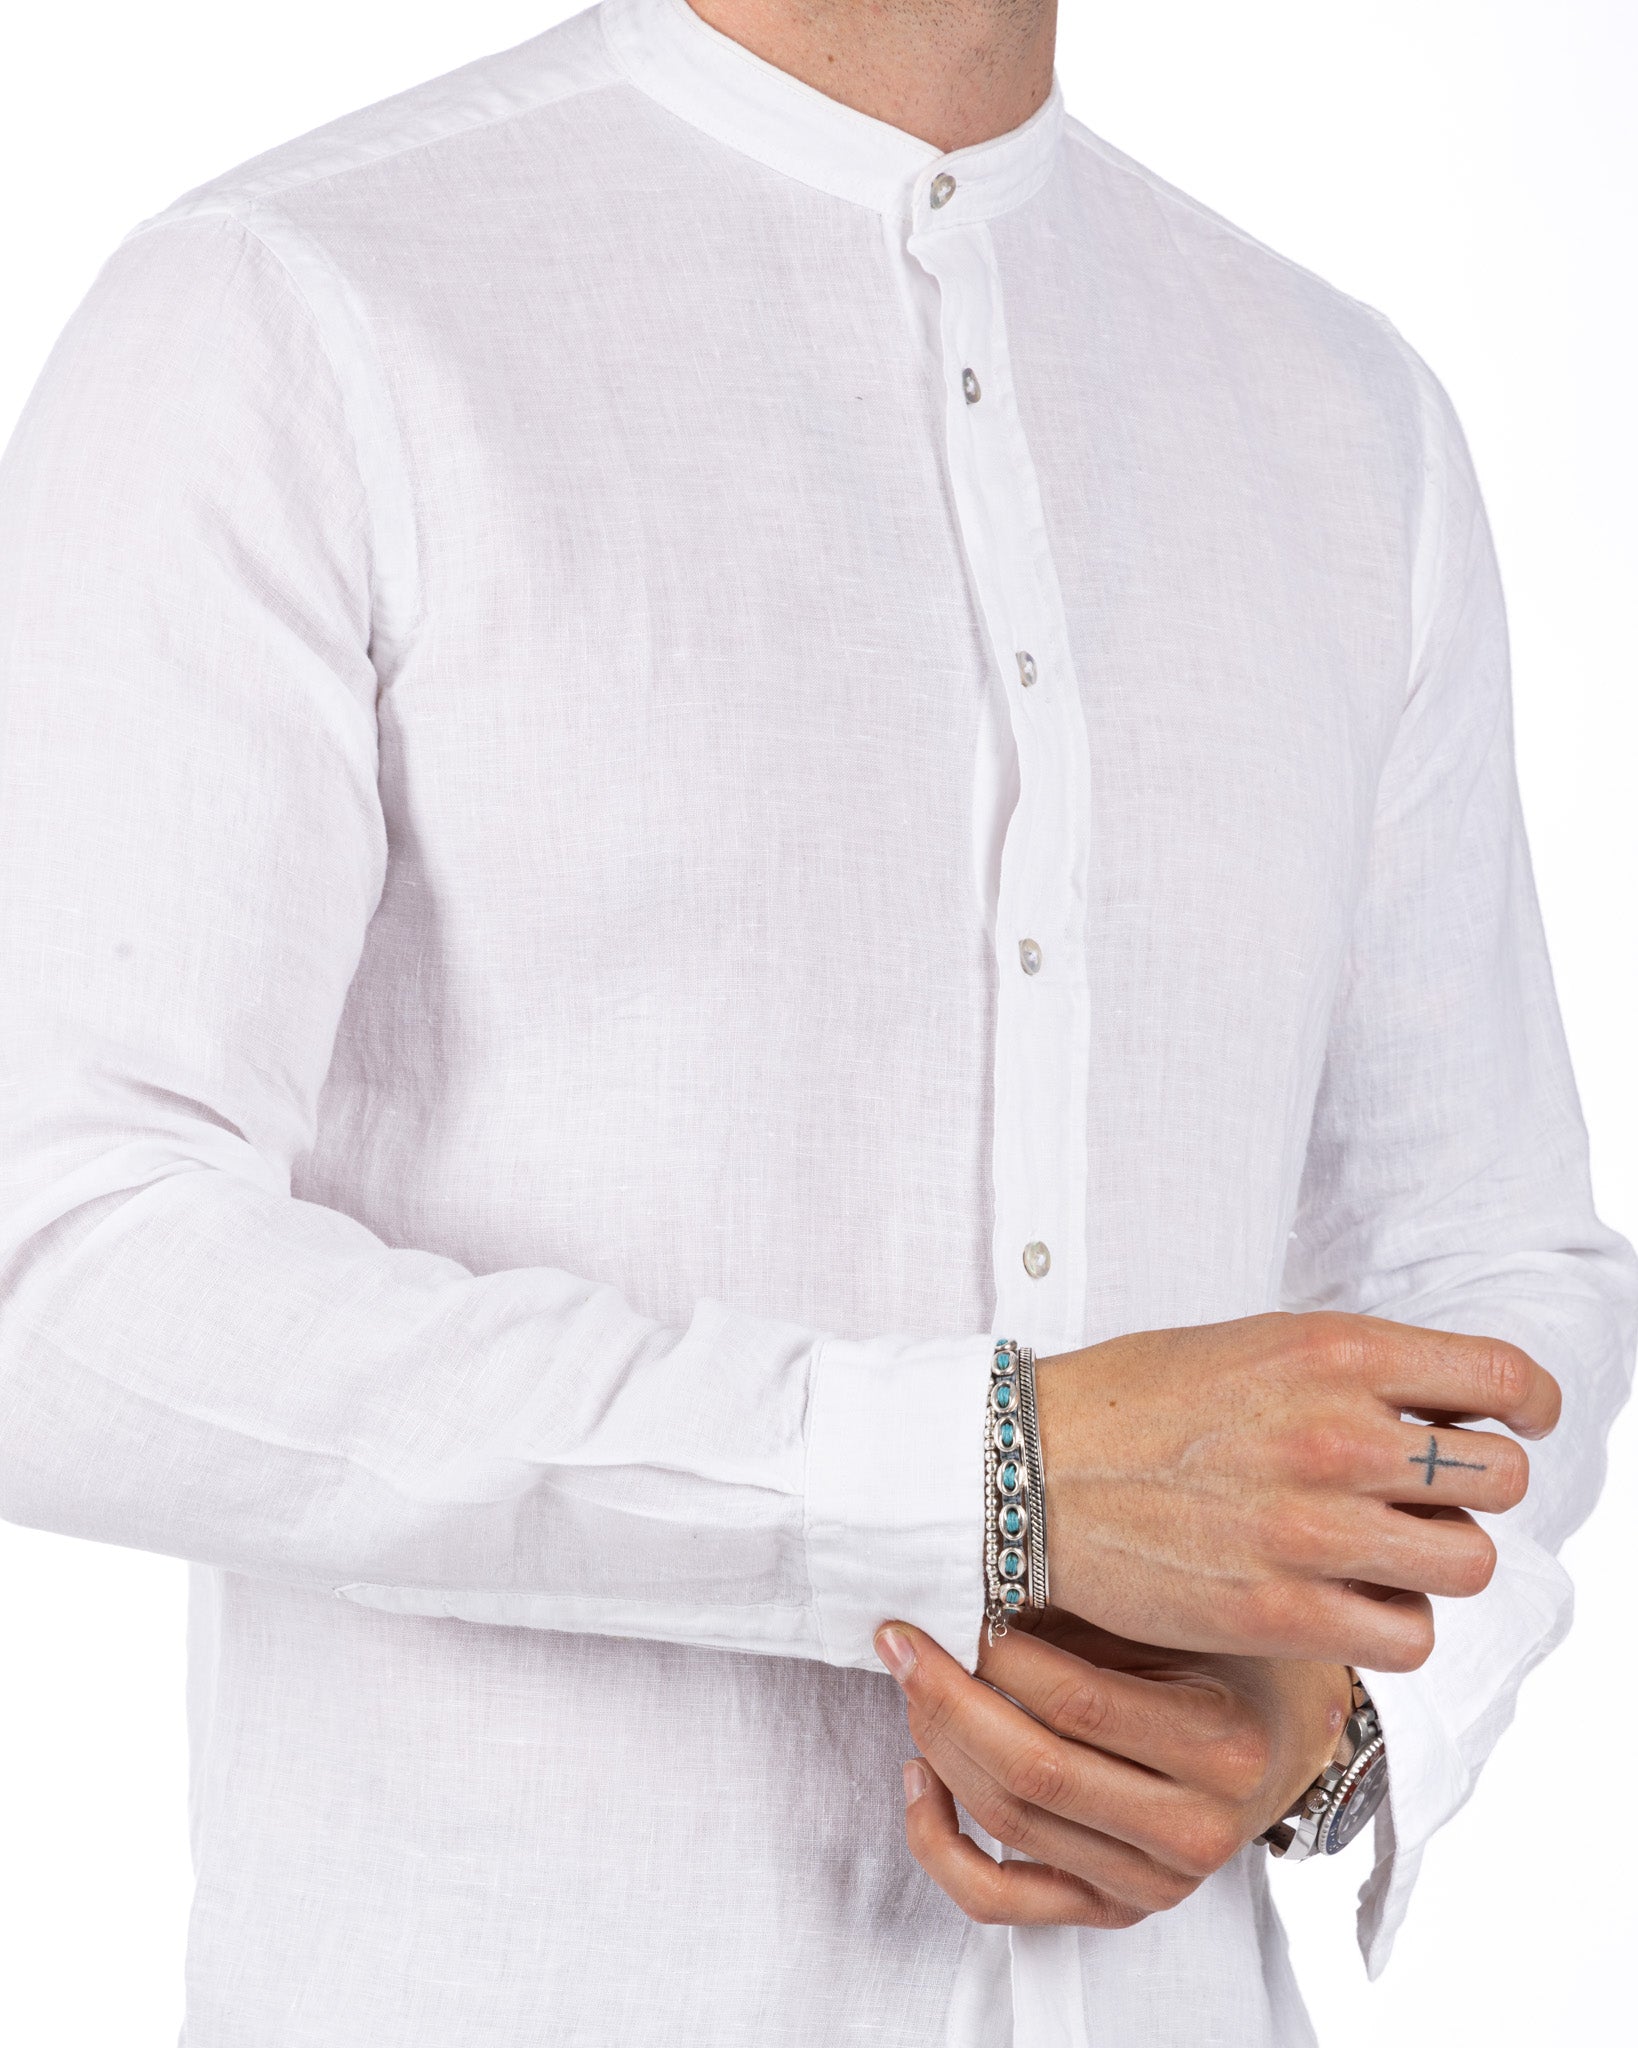 Nizza - Korean shirt in pure white linen